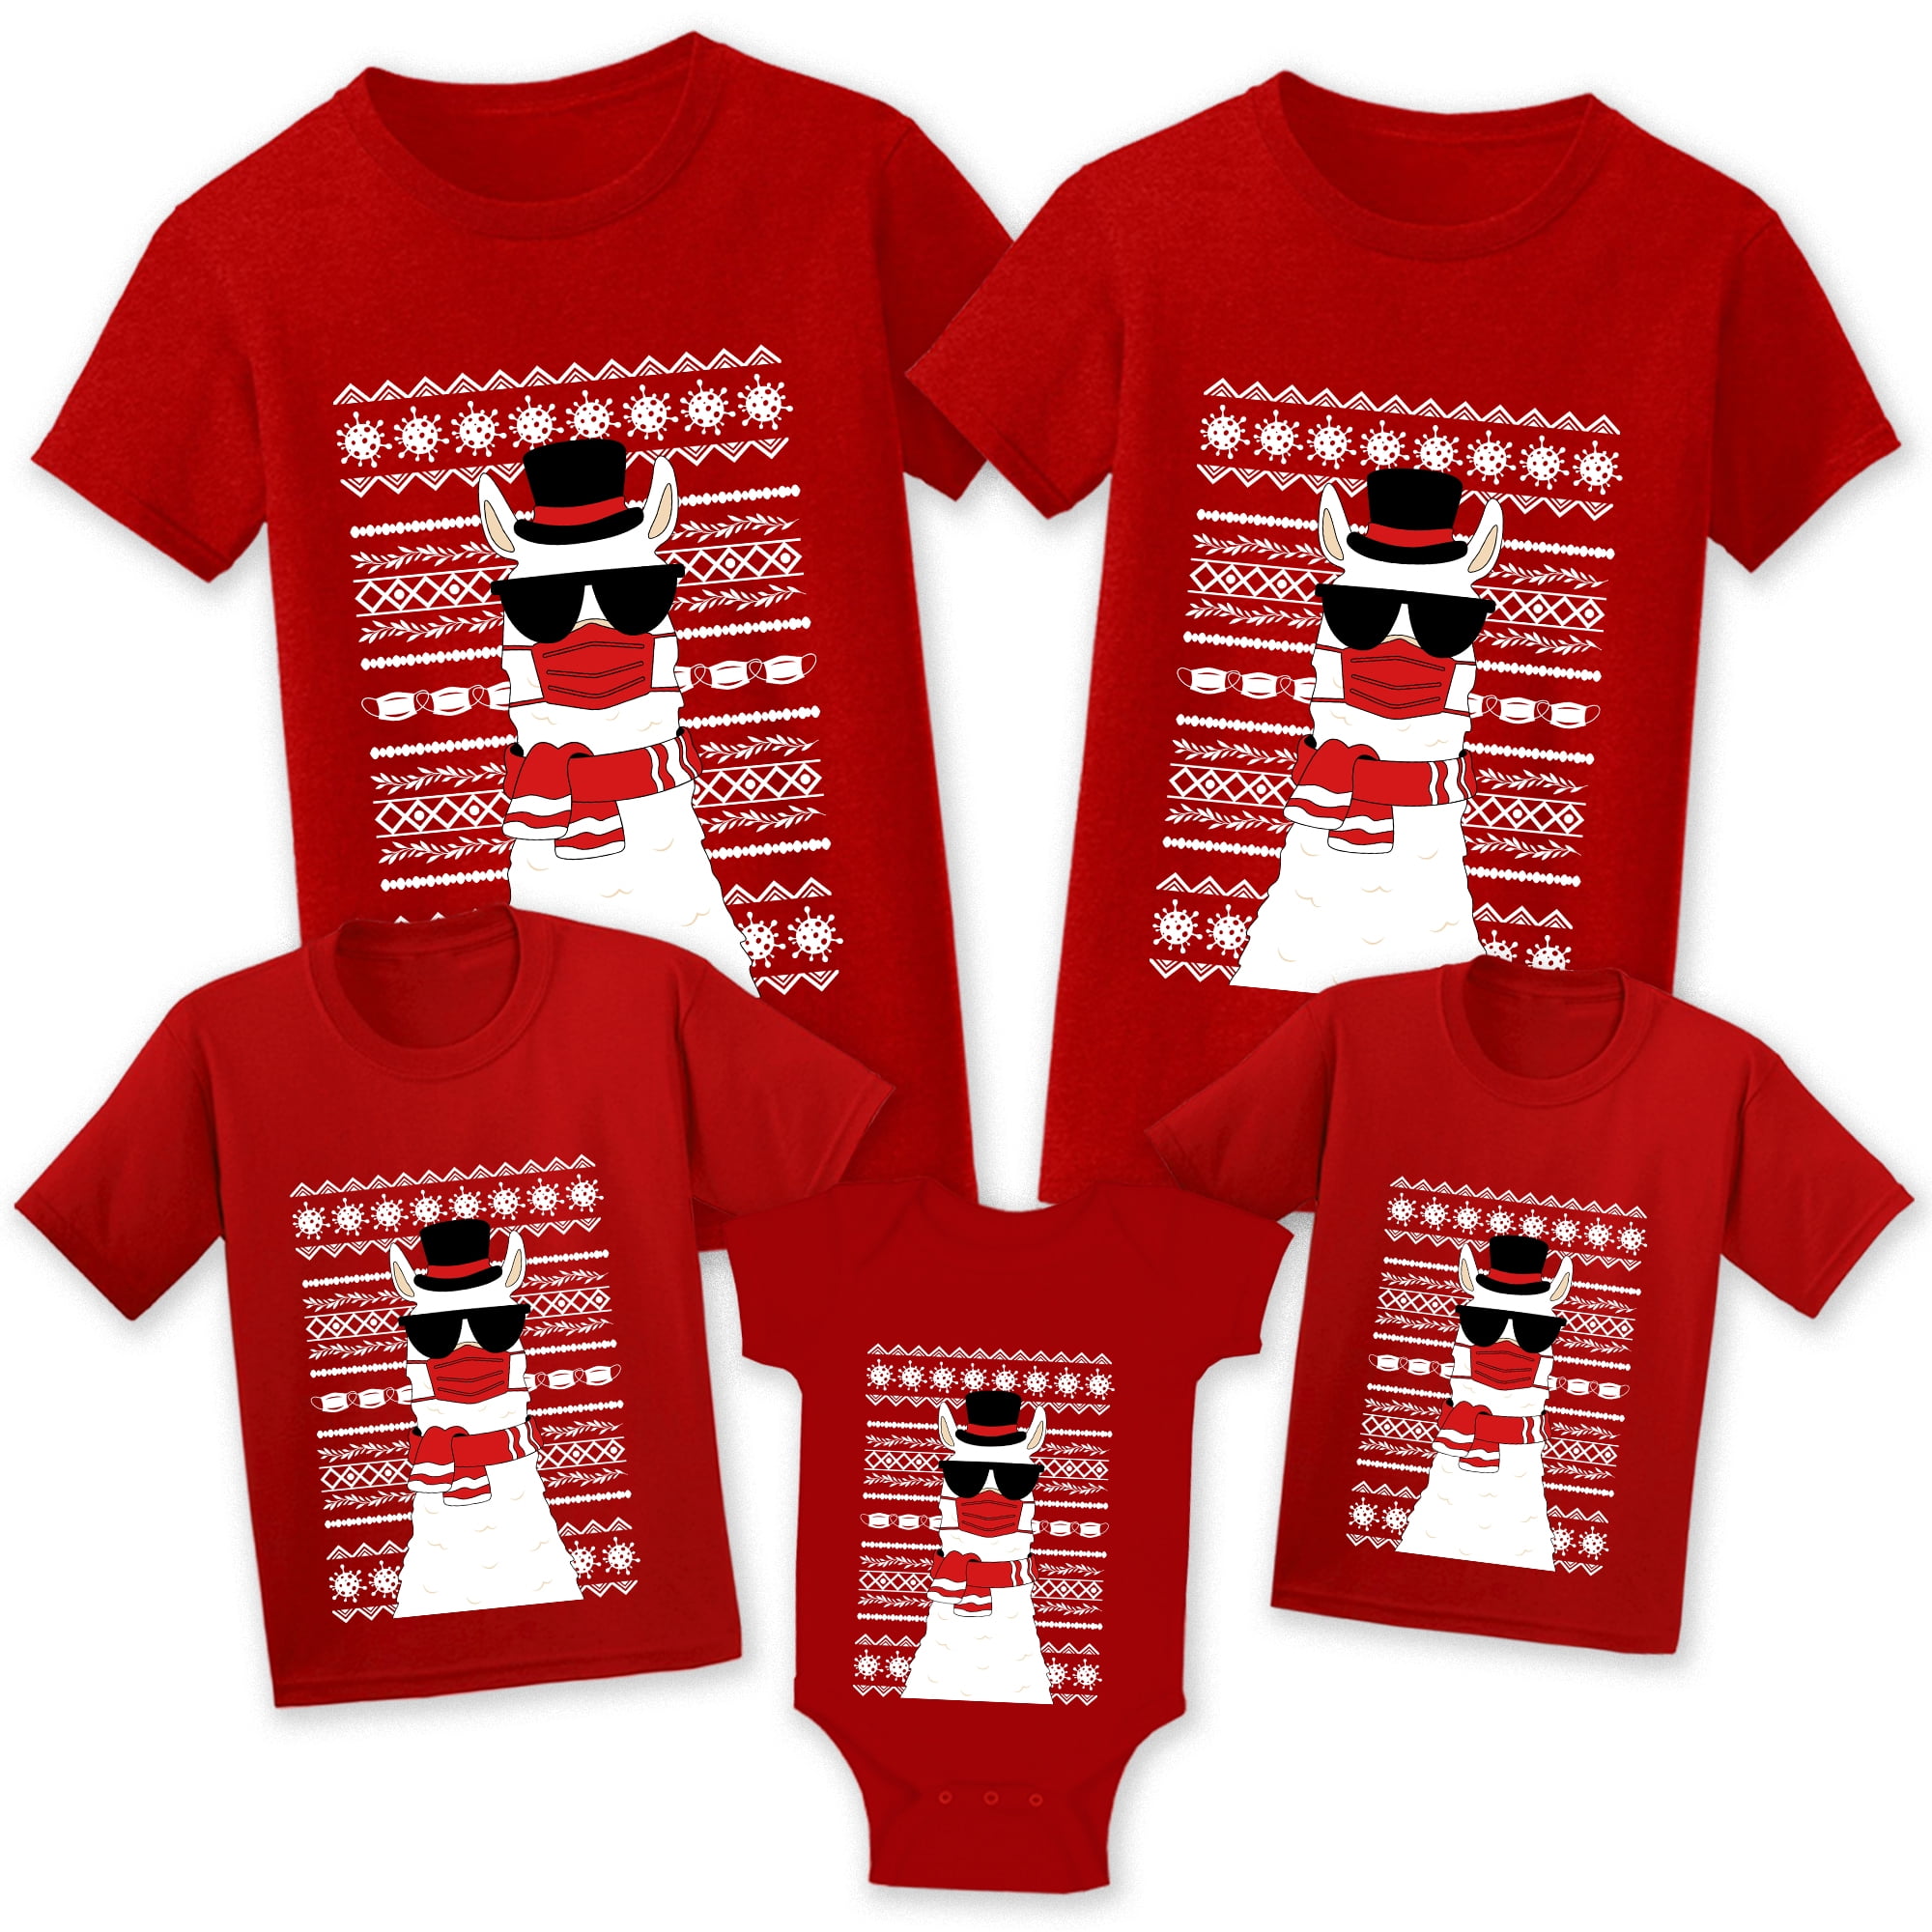 Christmas Believe Tree Shirt Cute Short Sleeve Christmas Graphic Tee Shirts Tops for Women Christmas Shirts